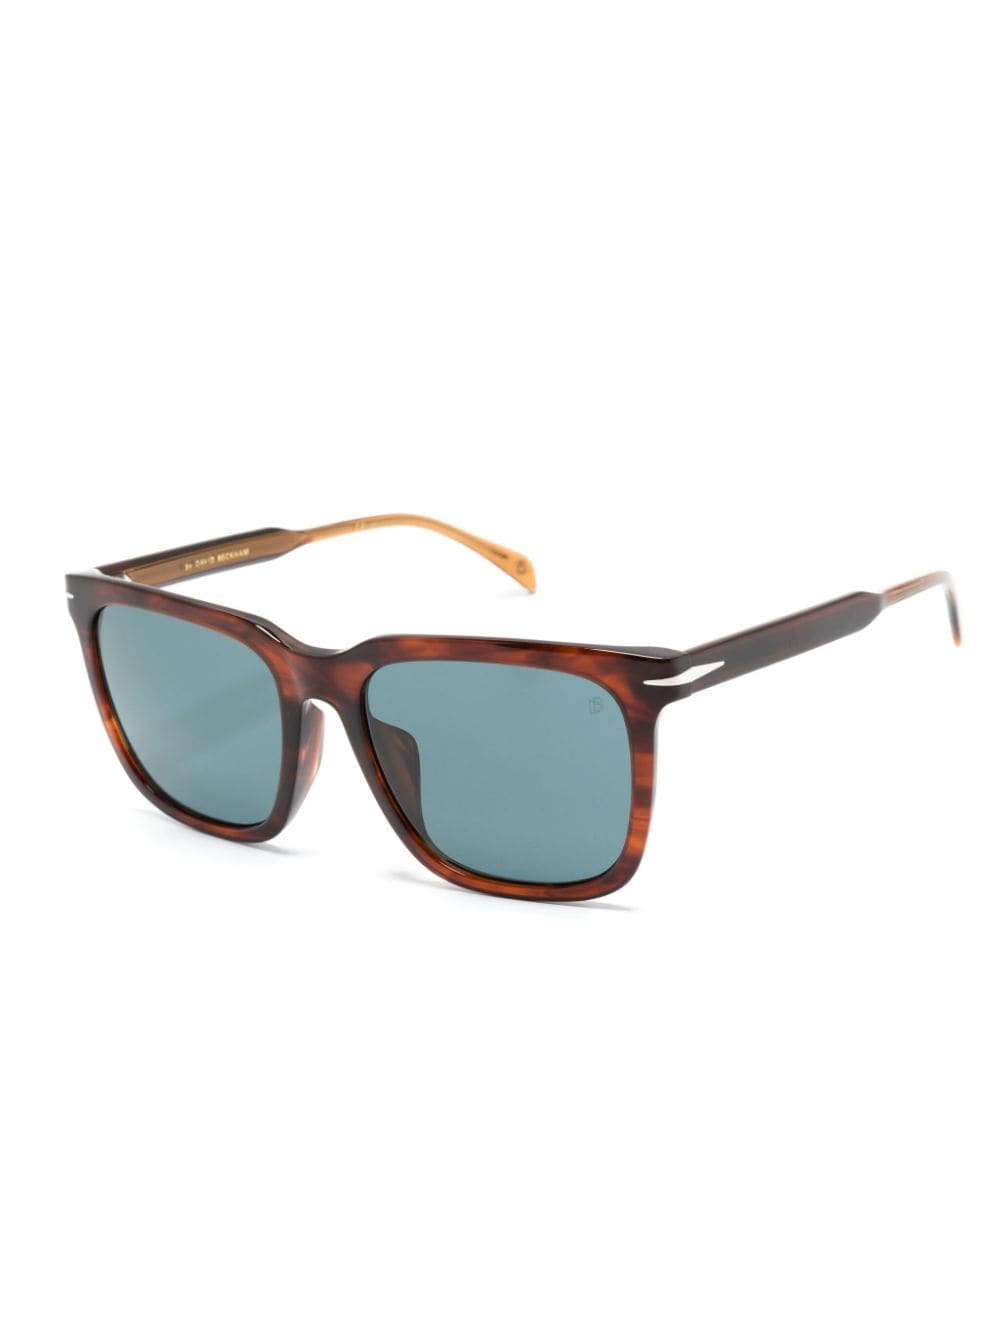 Image 2 of Eyewear by David Beckham square-frame sunglasses